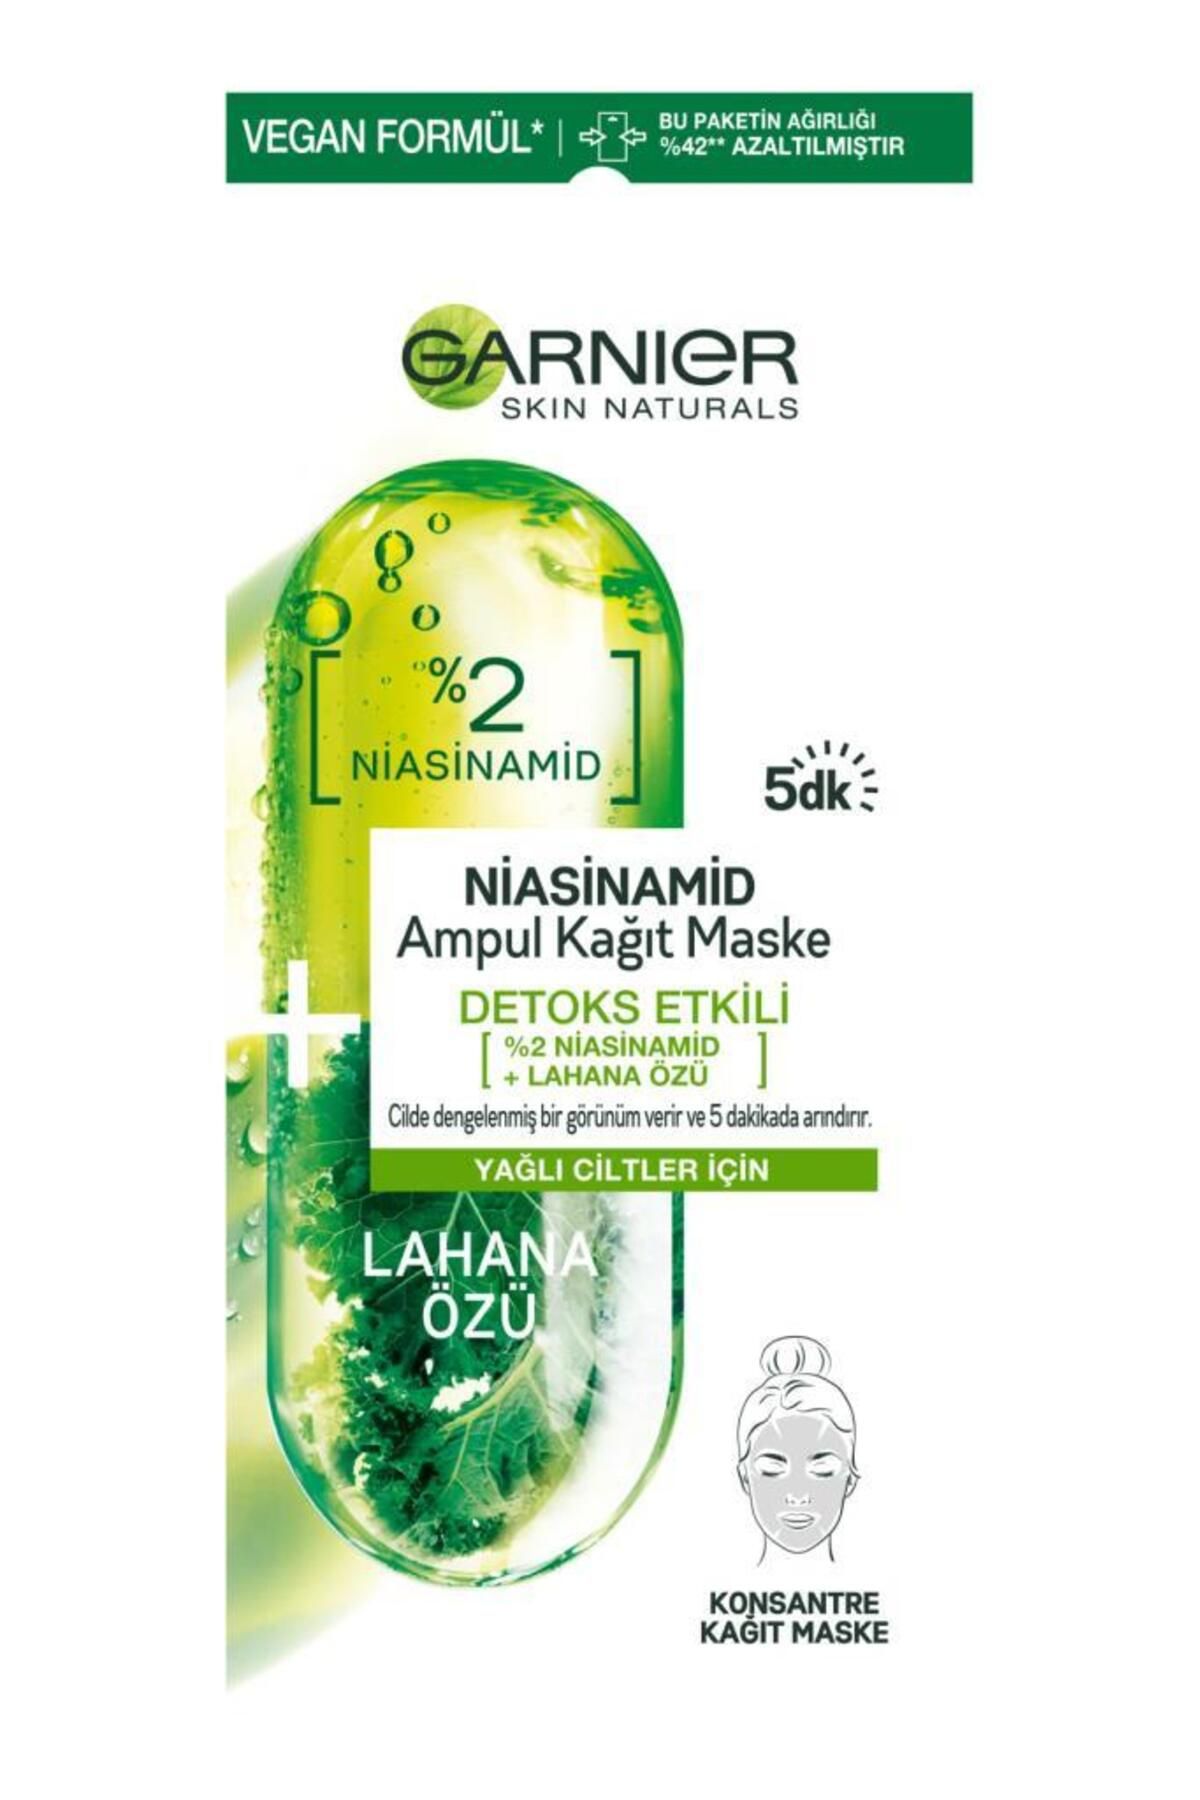 Garnier پوسته کاغذی ماسک پاک‌کننده موثر نیاسینامید دتاکس